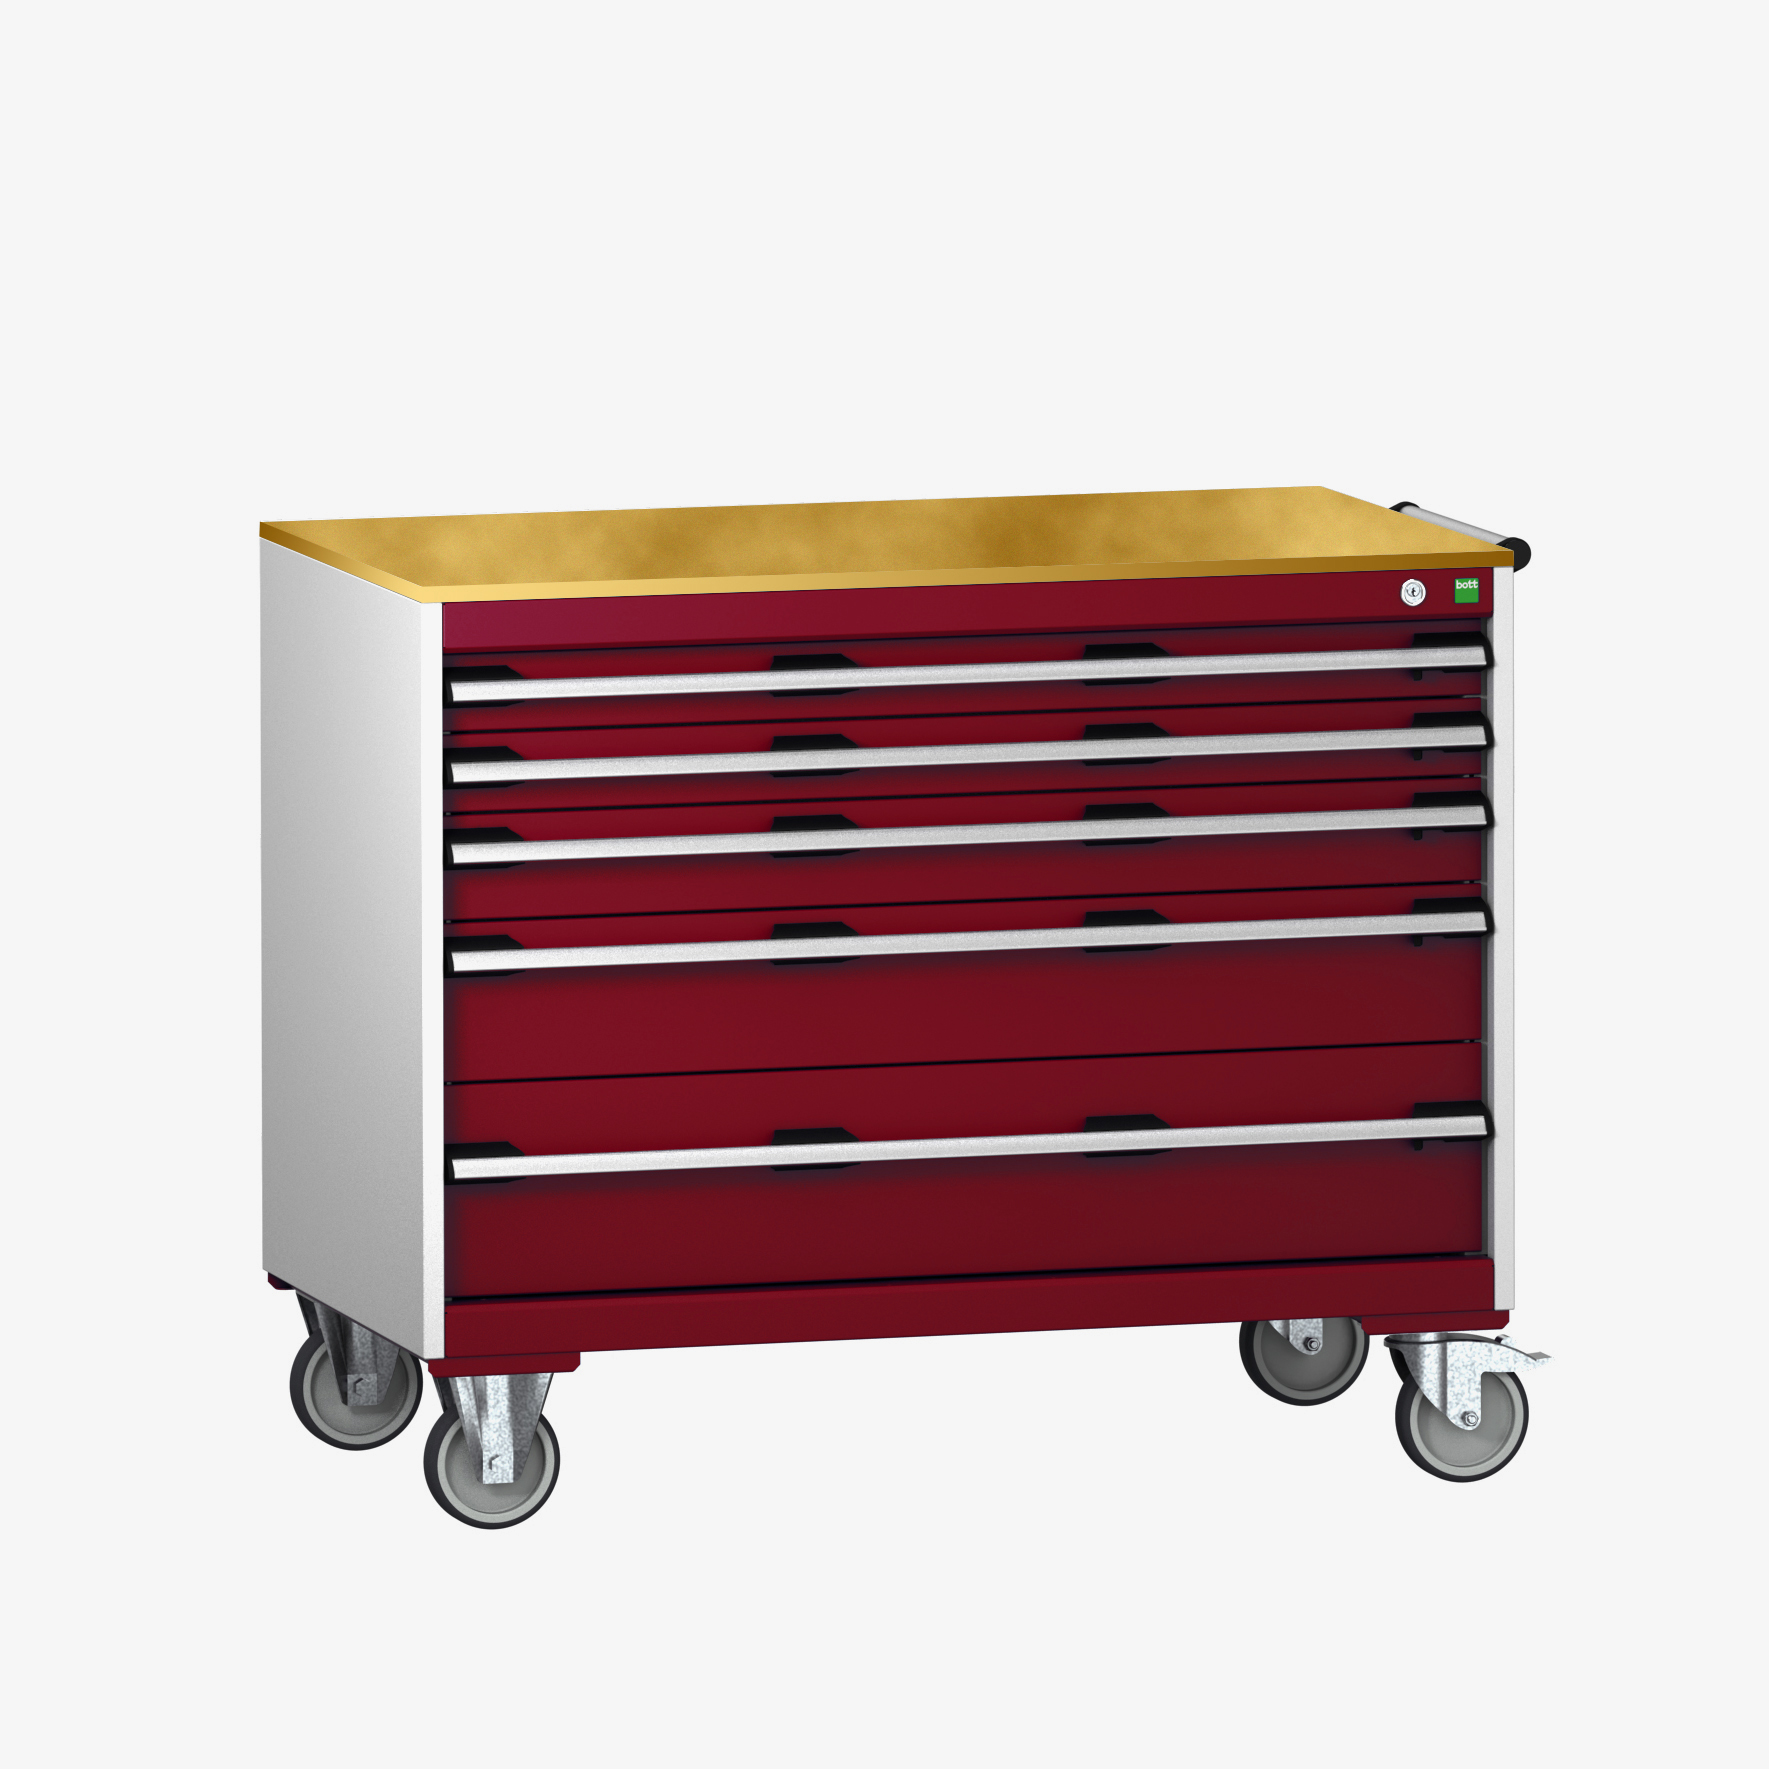 Bott Cubio Mobile Drawer Cabinet With 5 Drawers & Multiplex Worktop - 40402163.24V